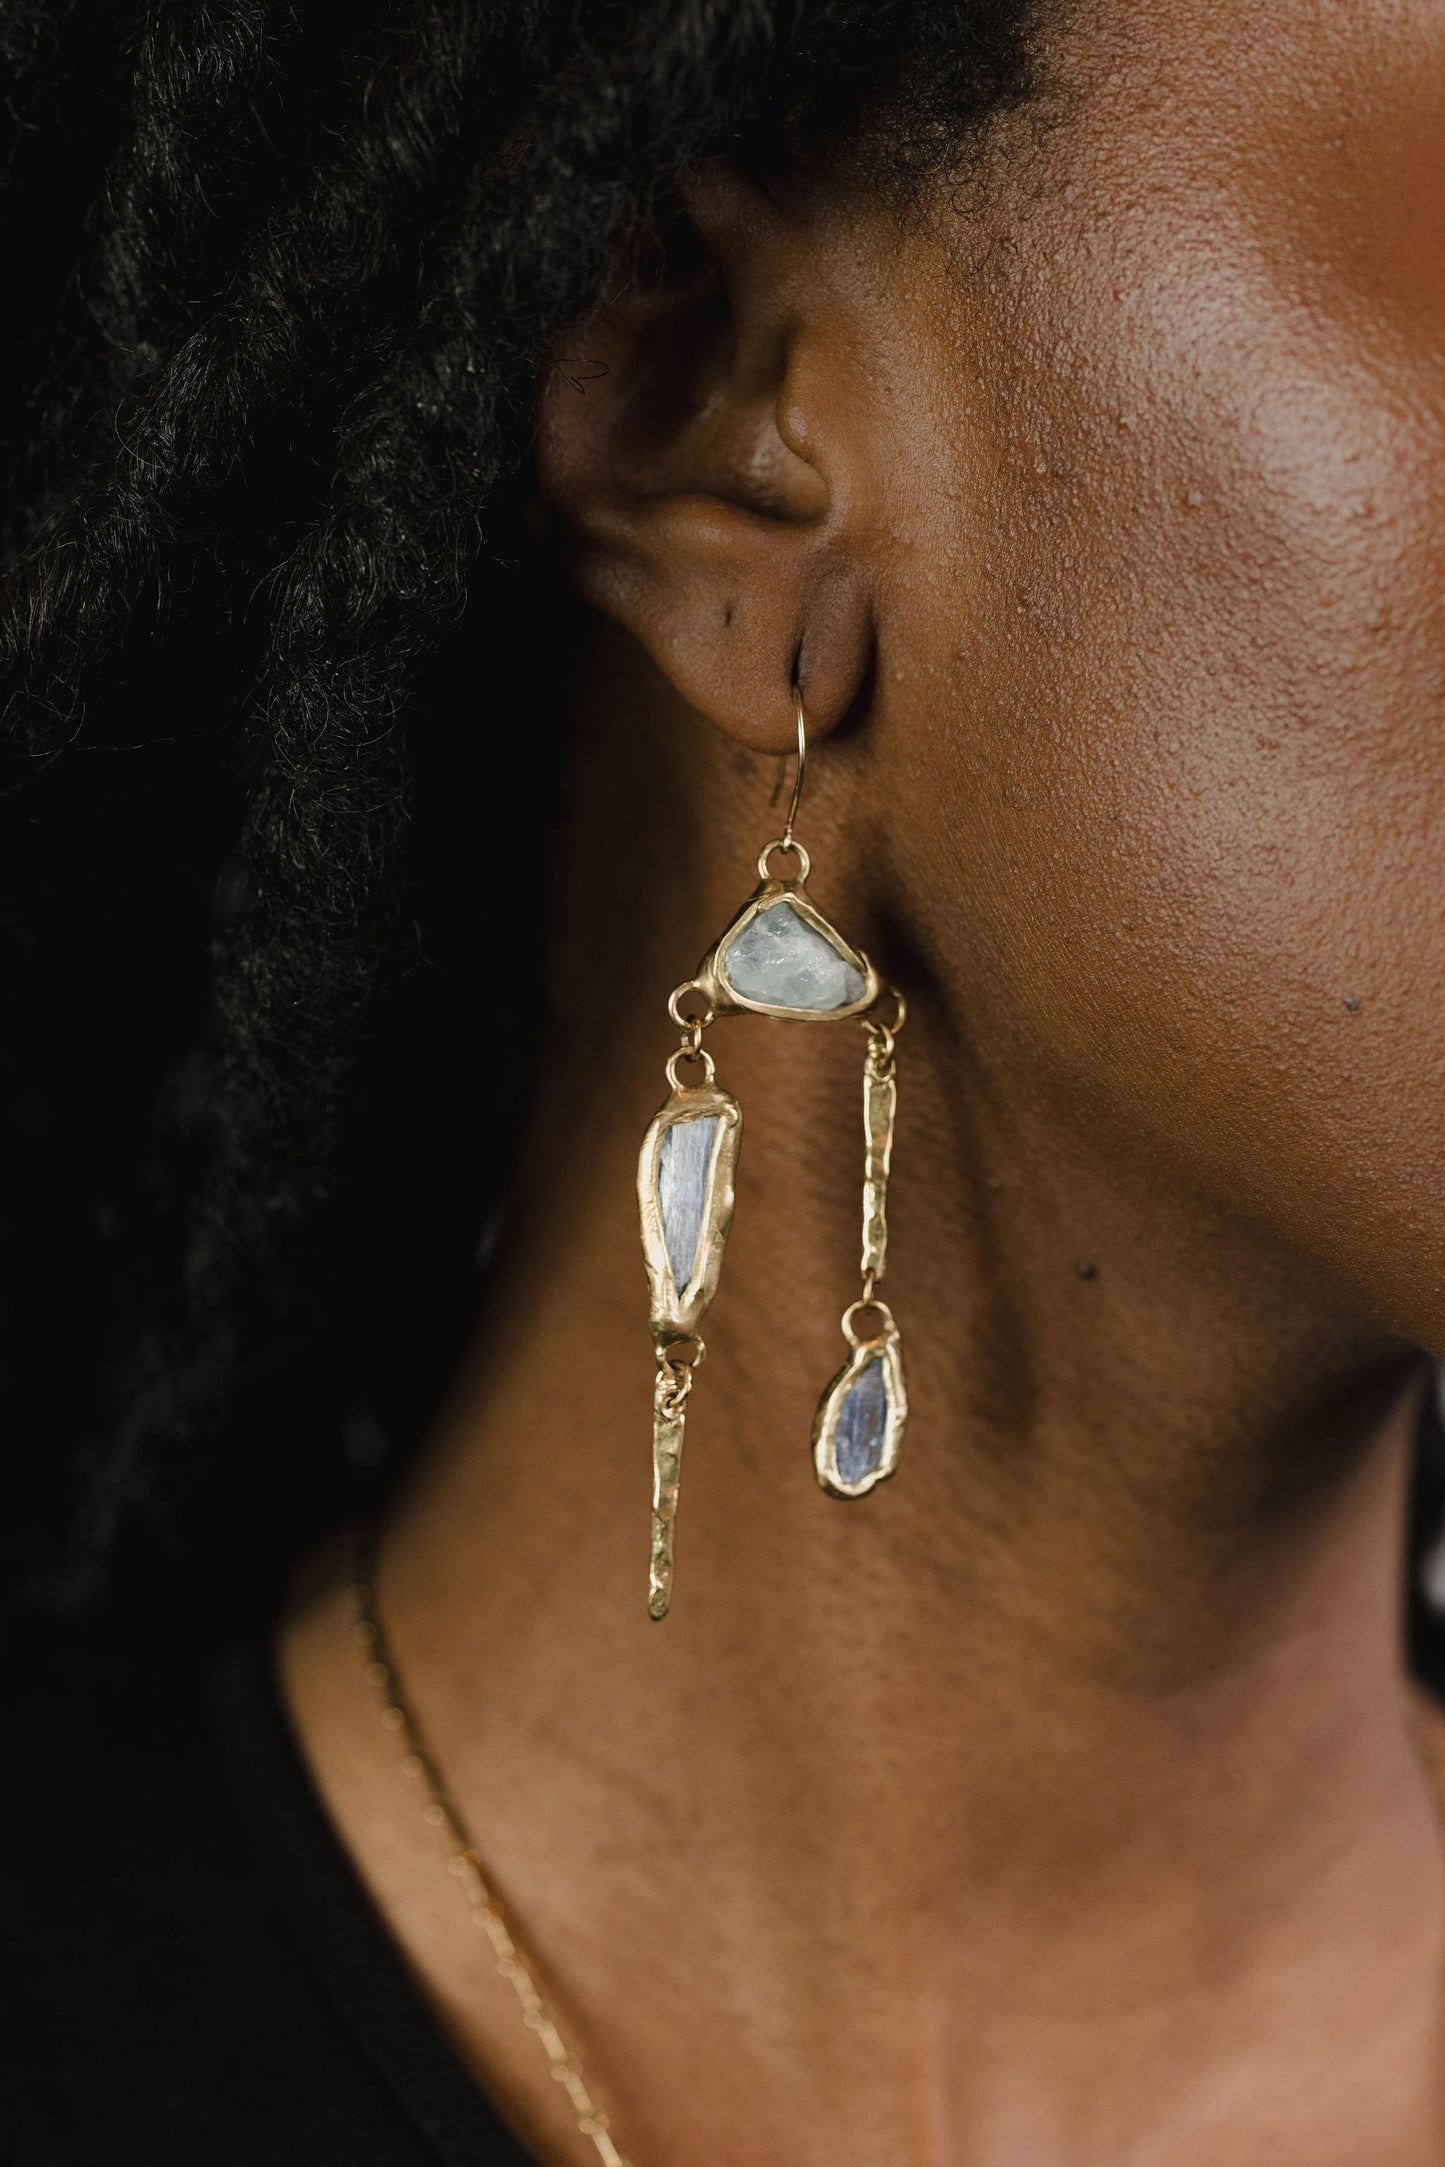 Whitewater earrings on model